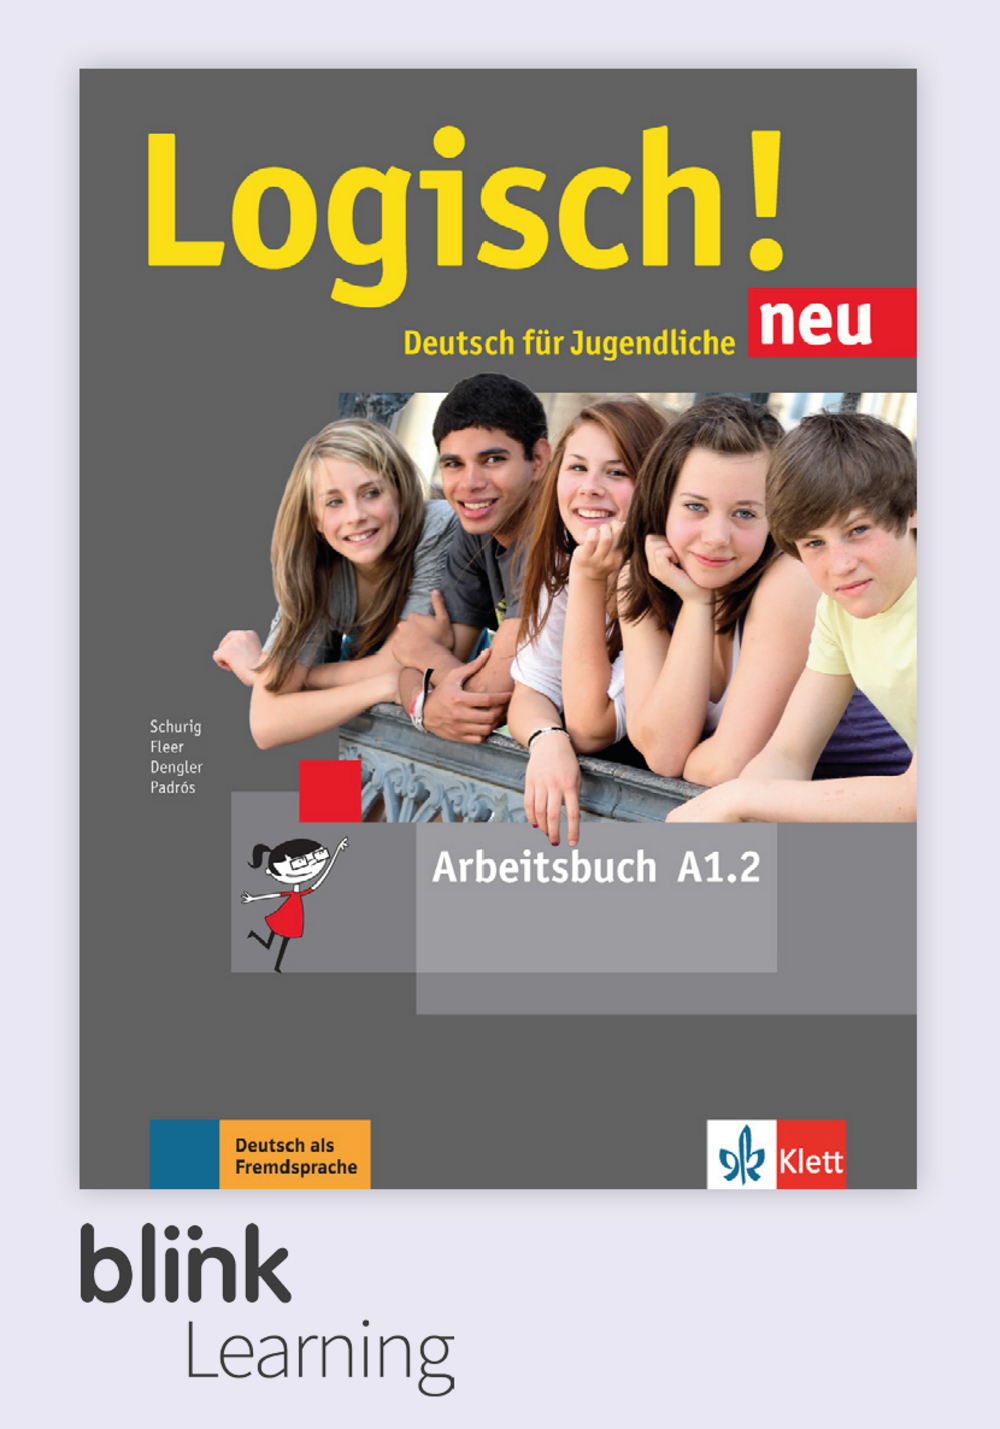 Logisch! NEU A1.2 Digital Arbeitsbuch für Lernende / Цифровая рабочая тетрадь для ученика